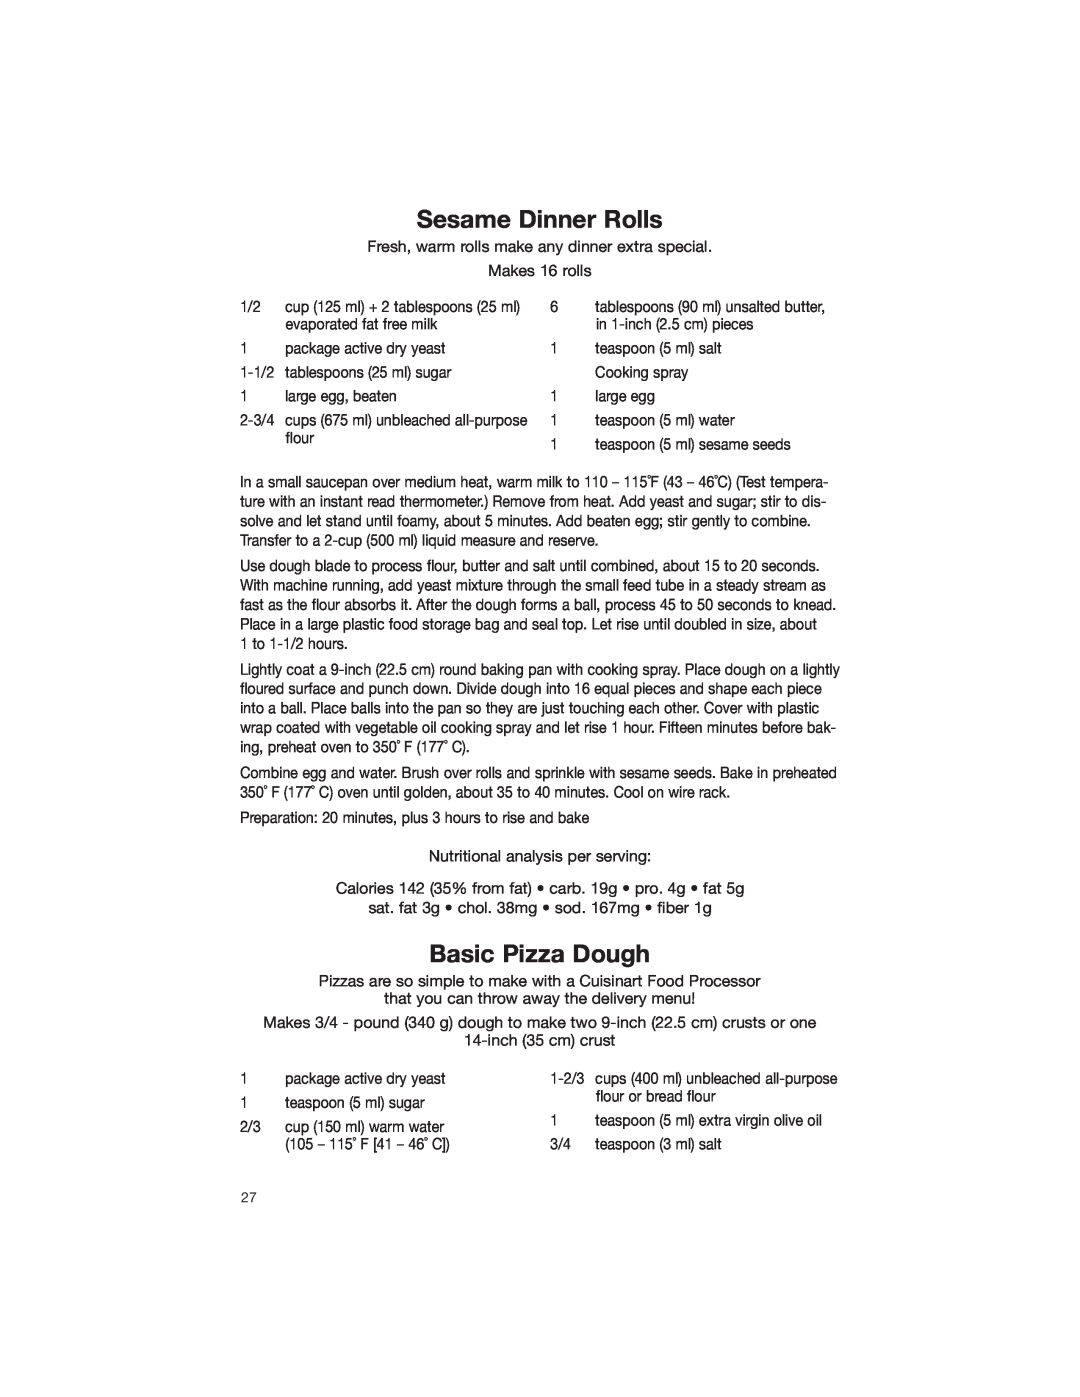 Cuisinart DLC-2007NC manual Sesame Dinner Rolls, Basic Pizza Dough 